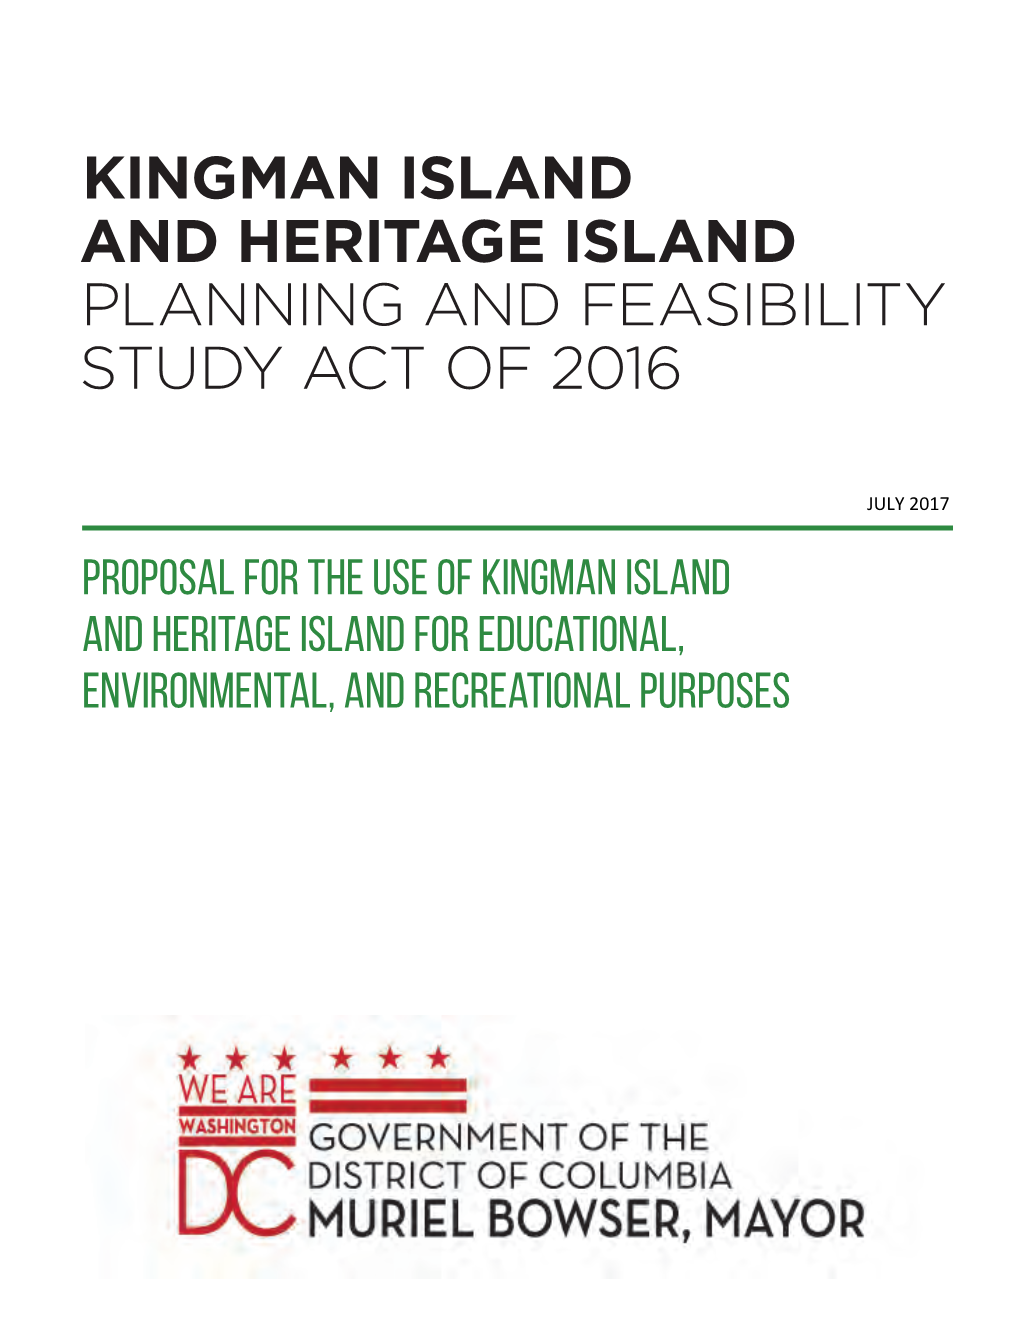 Kingman Island and Heritage Island Planning and Feasibility Study Act of 2016